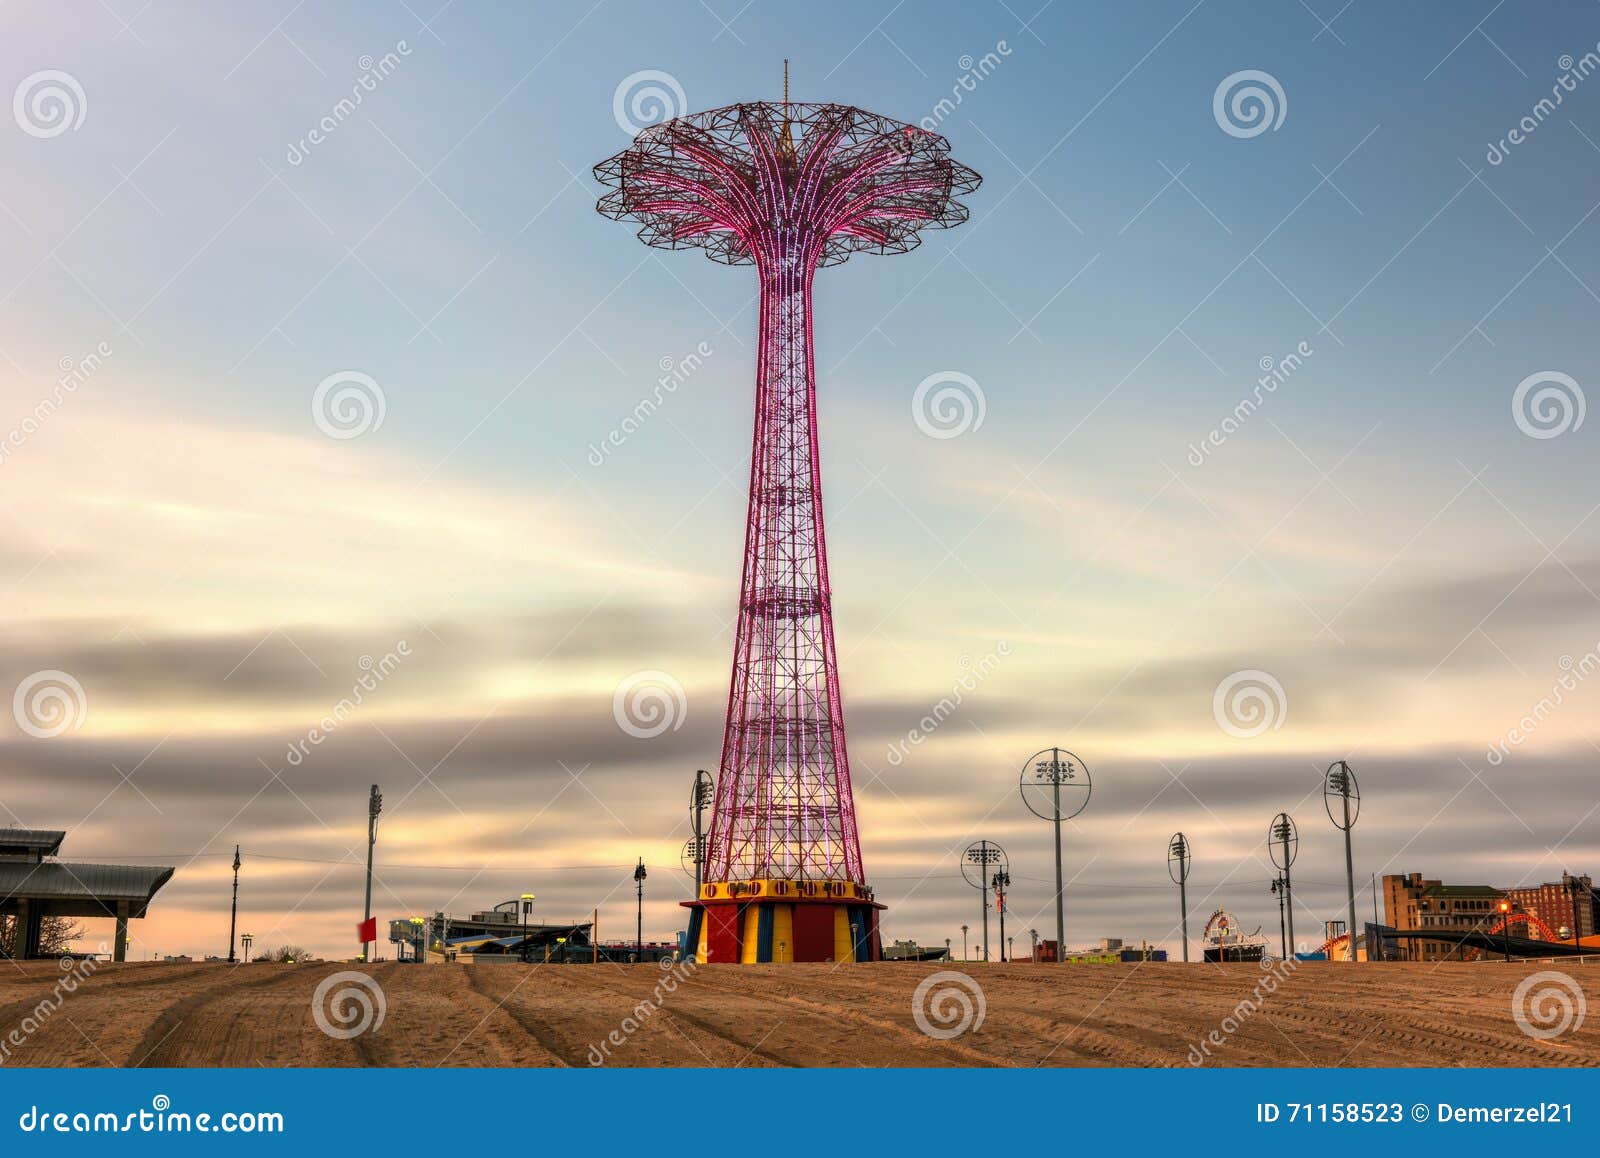 Parachute Jump - New York City Stock Image - Image of coney, enjoyment